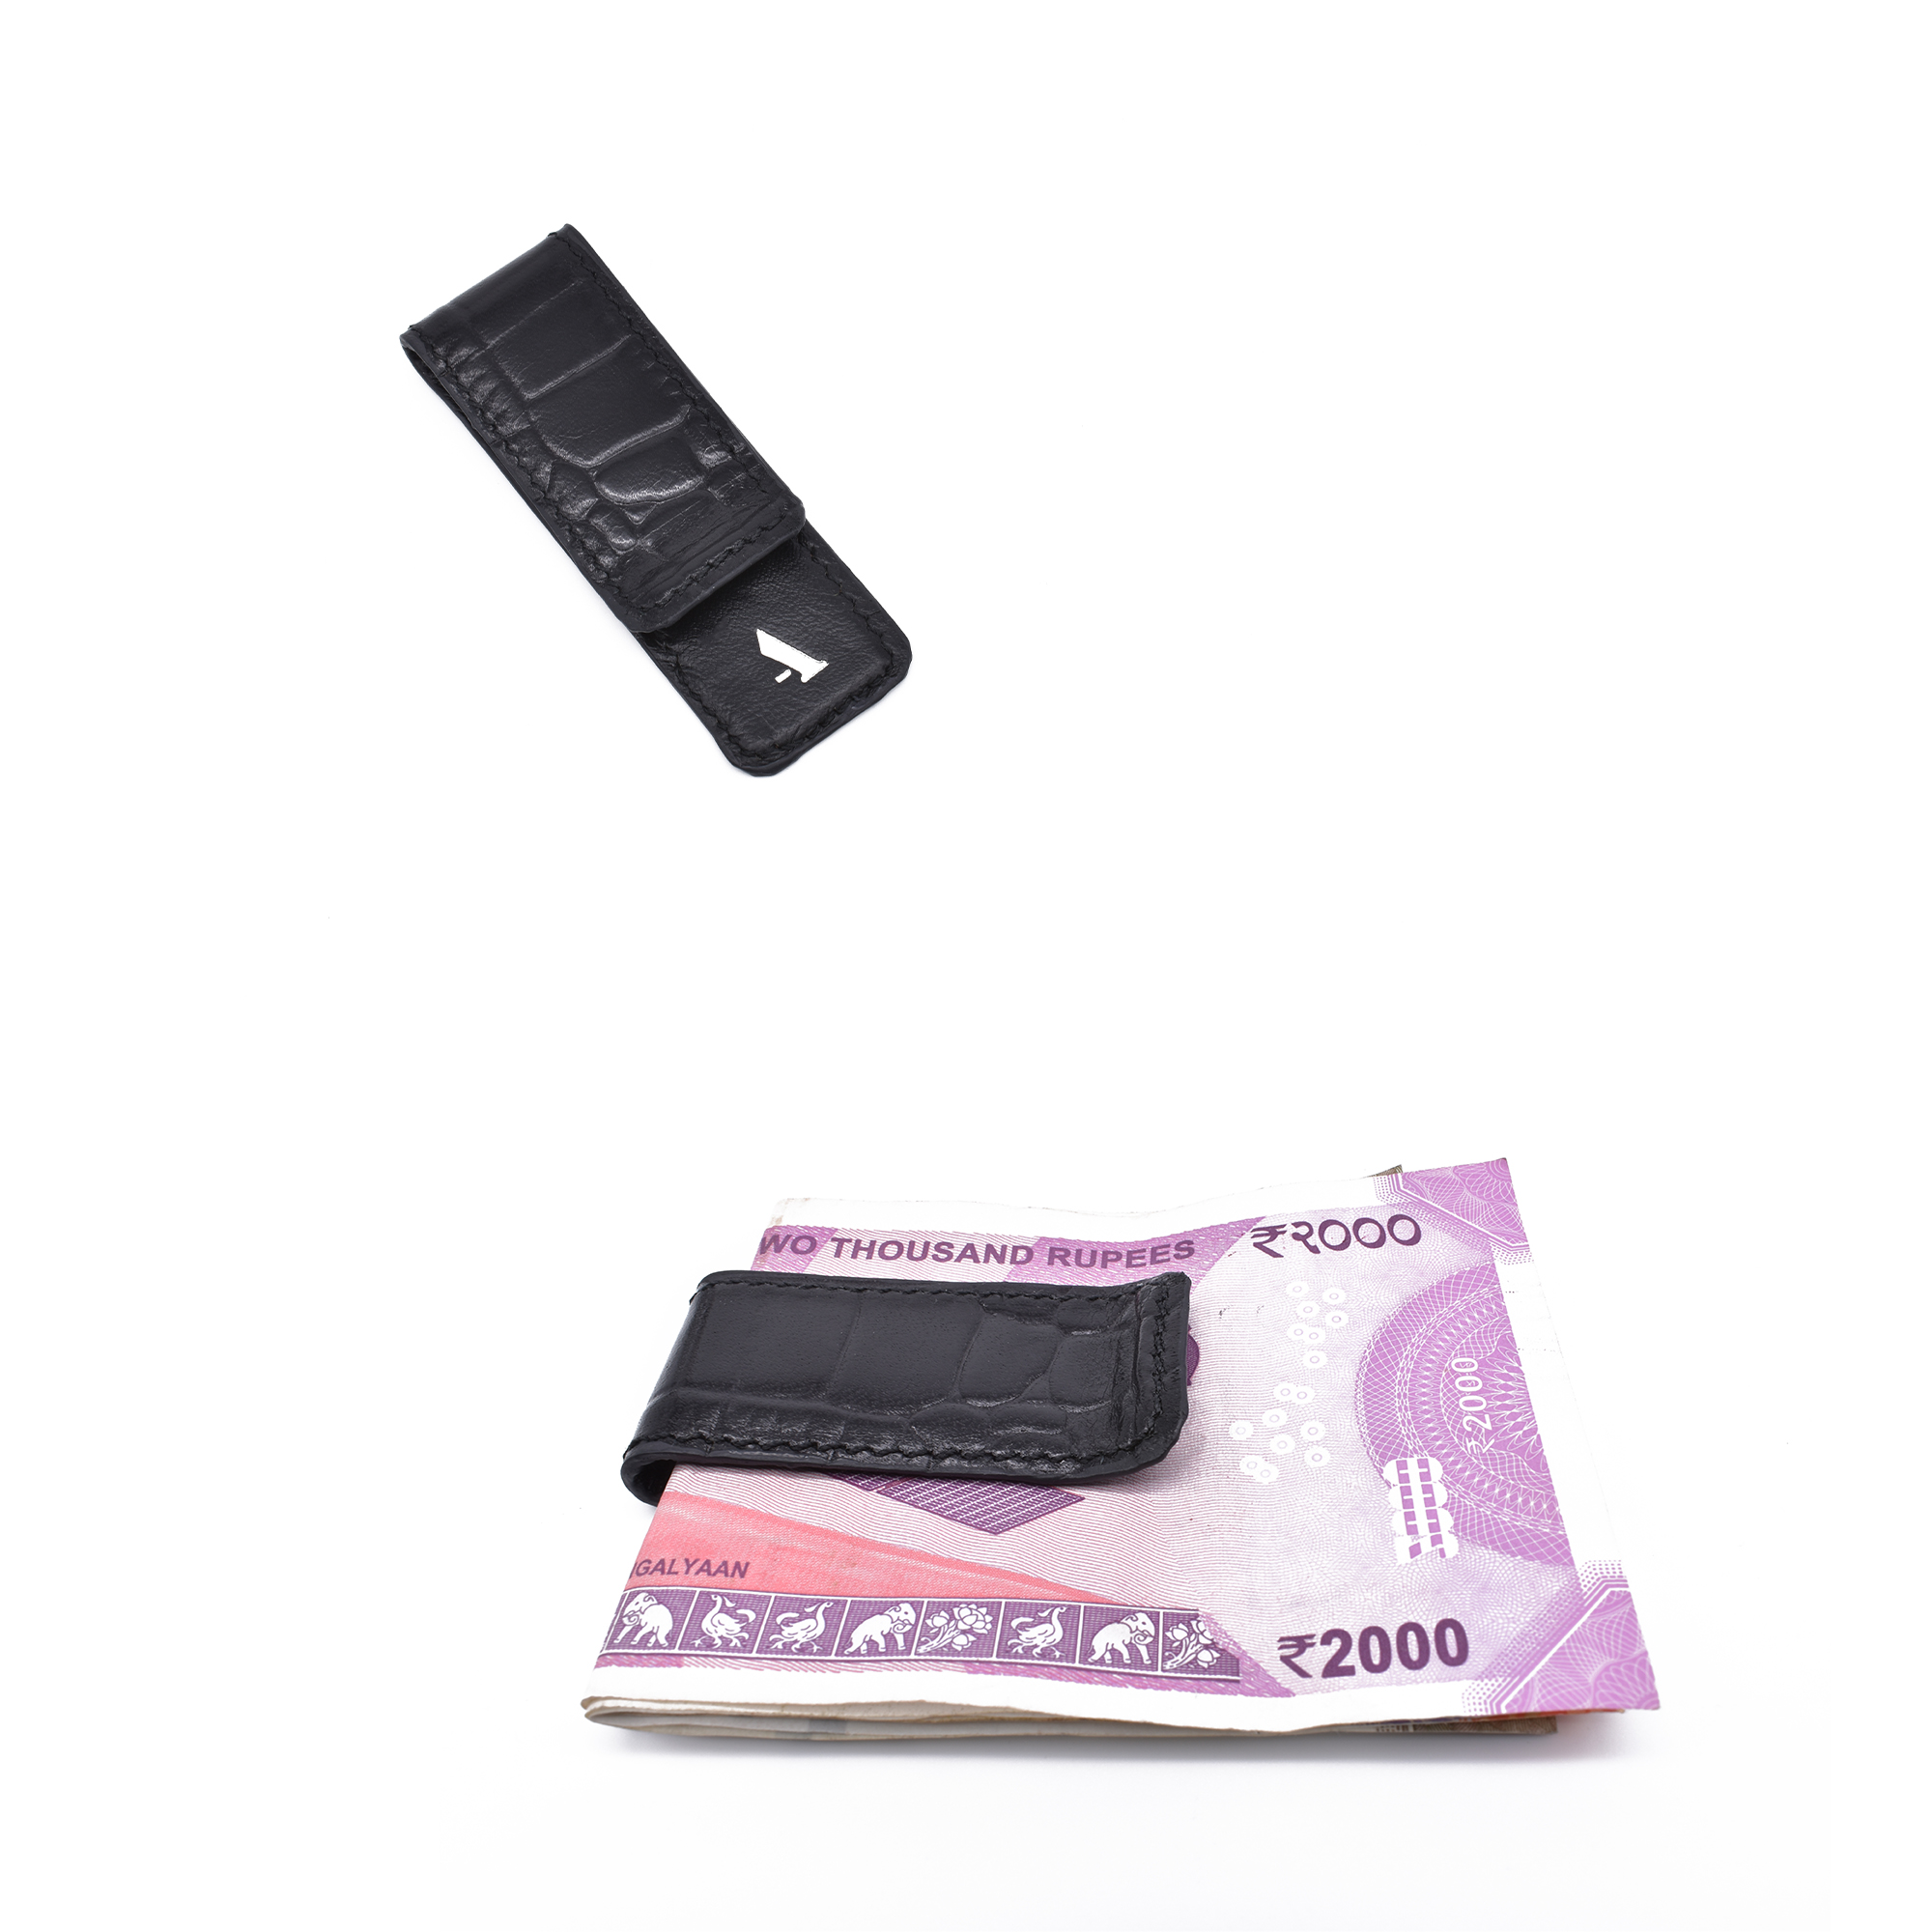 W336--Multipurpose card and money clip - Black